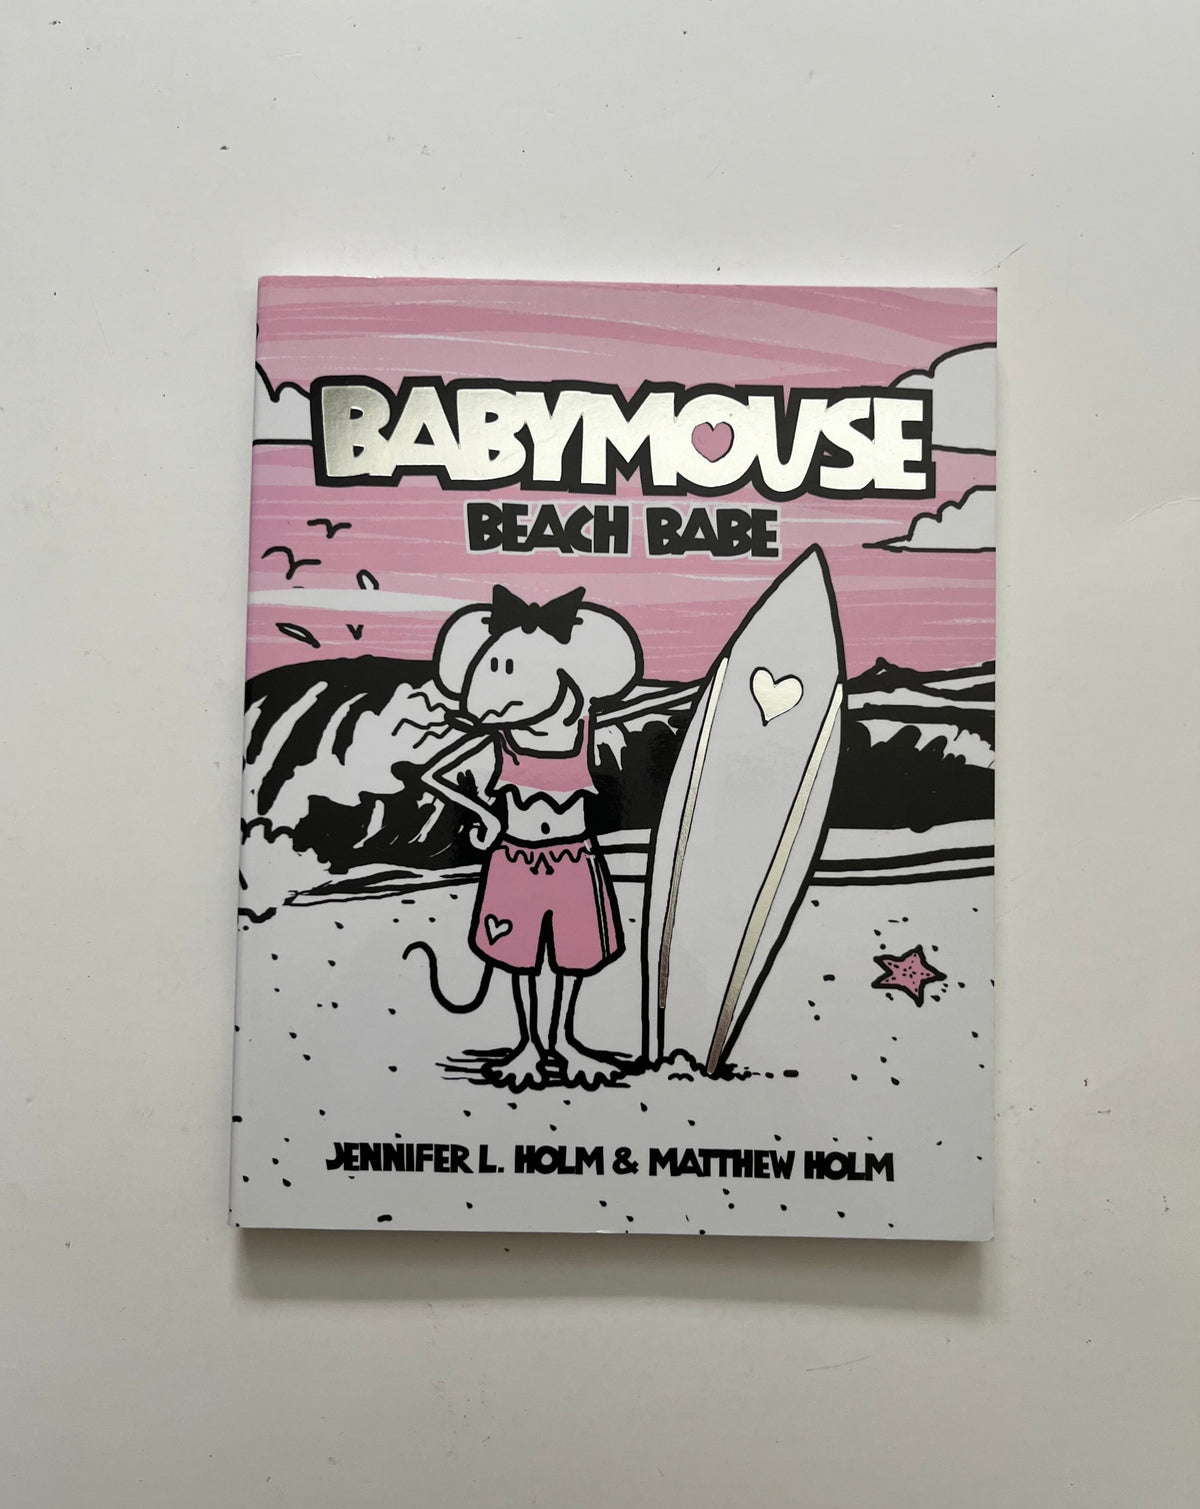 Babymouse: Beach Babe by Jennifer L. Holm &amp; Matthew Holm